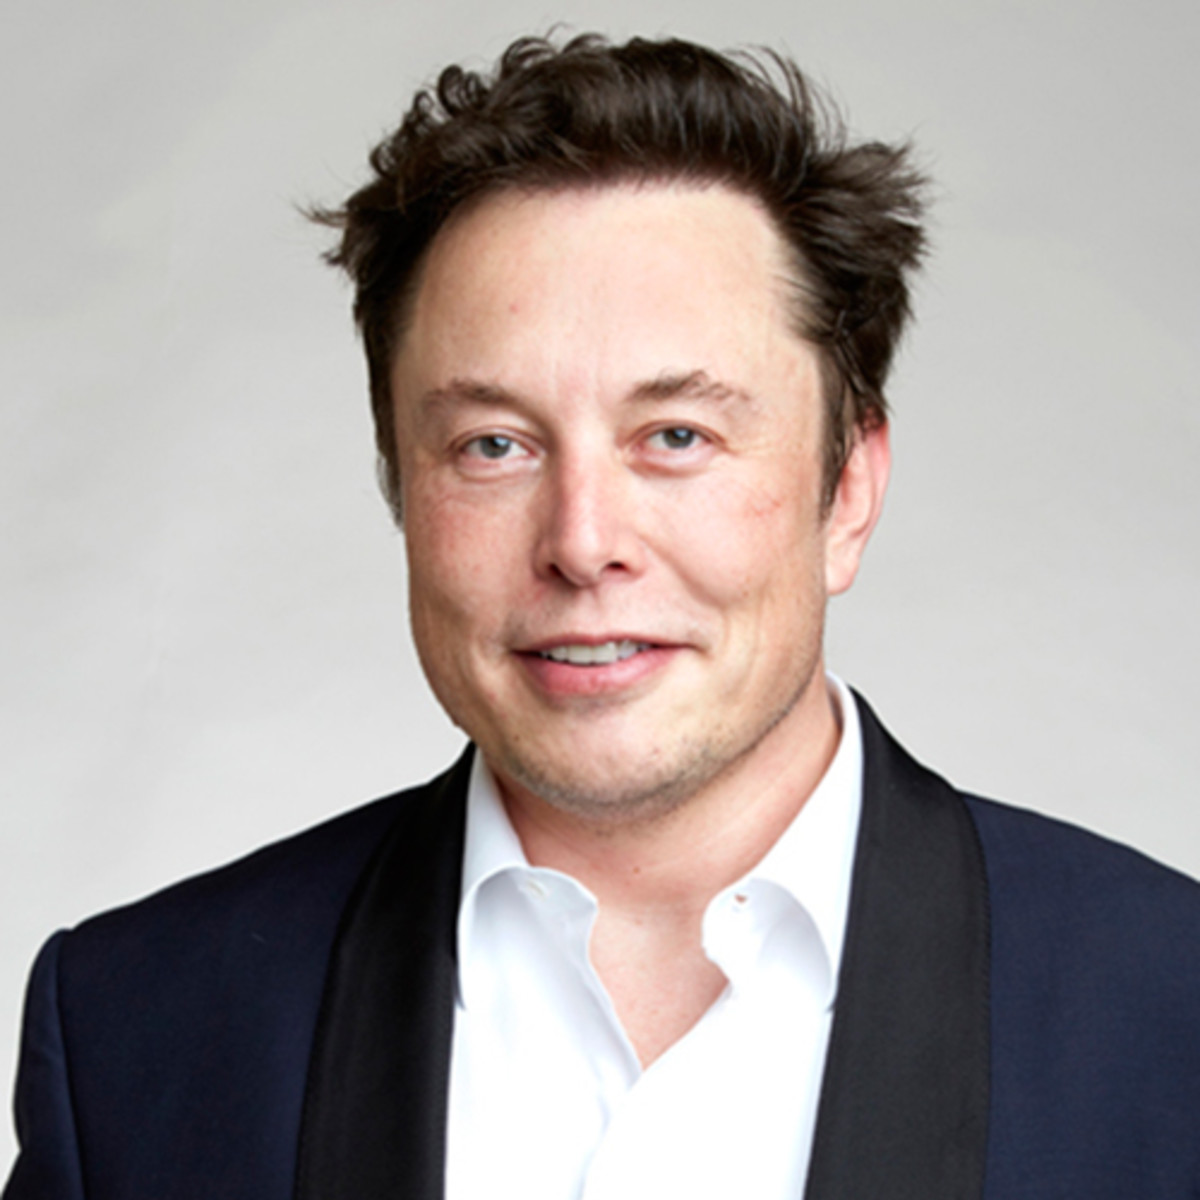 Biography of Elon Musk in Hindi|Elon Musk का जीवन परिचय